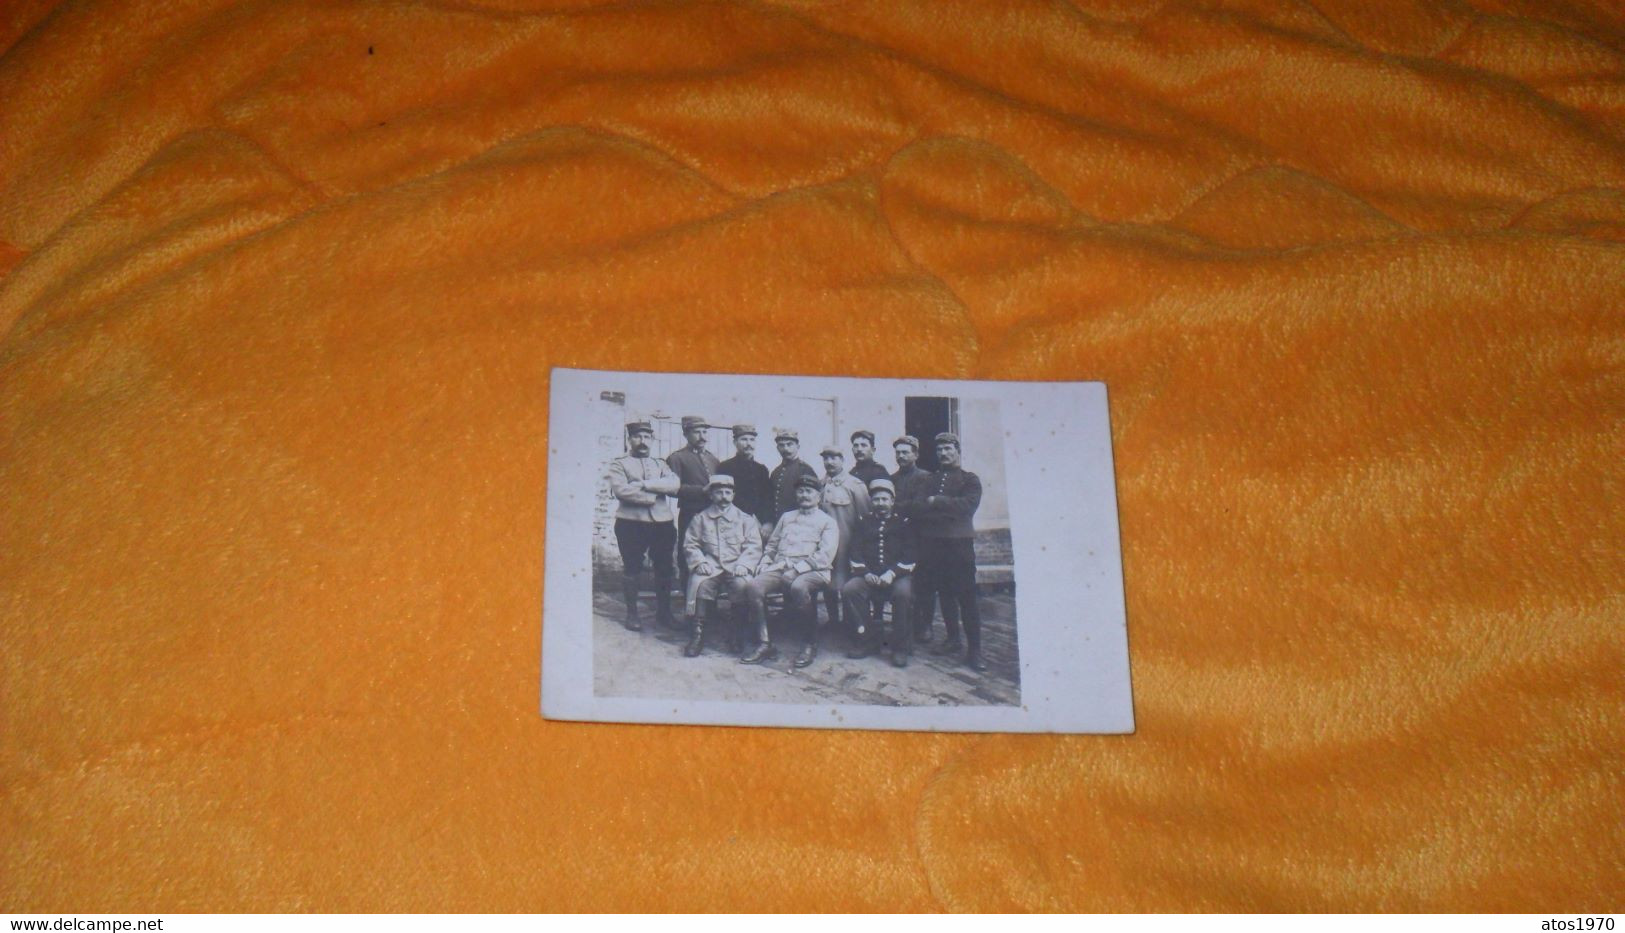 CARTE POSTALE PHOTO ANCIENNE NON CIRCULEE DATE ?.../ POSE PHOTO  MILITAIRES REGIMENT ?... - Guerra 1914-18